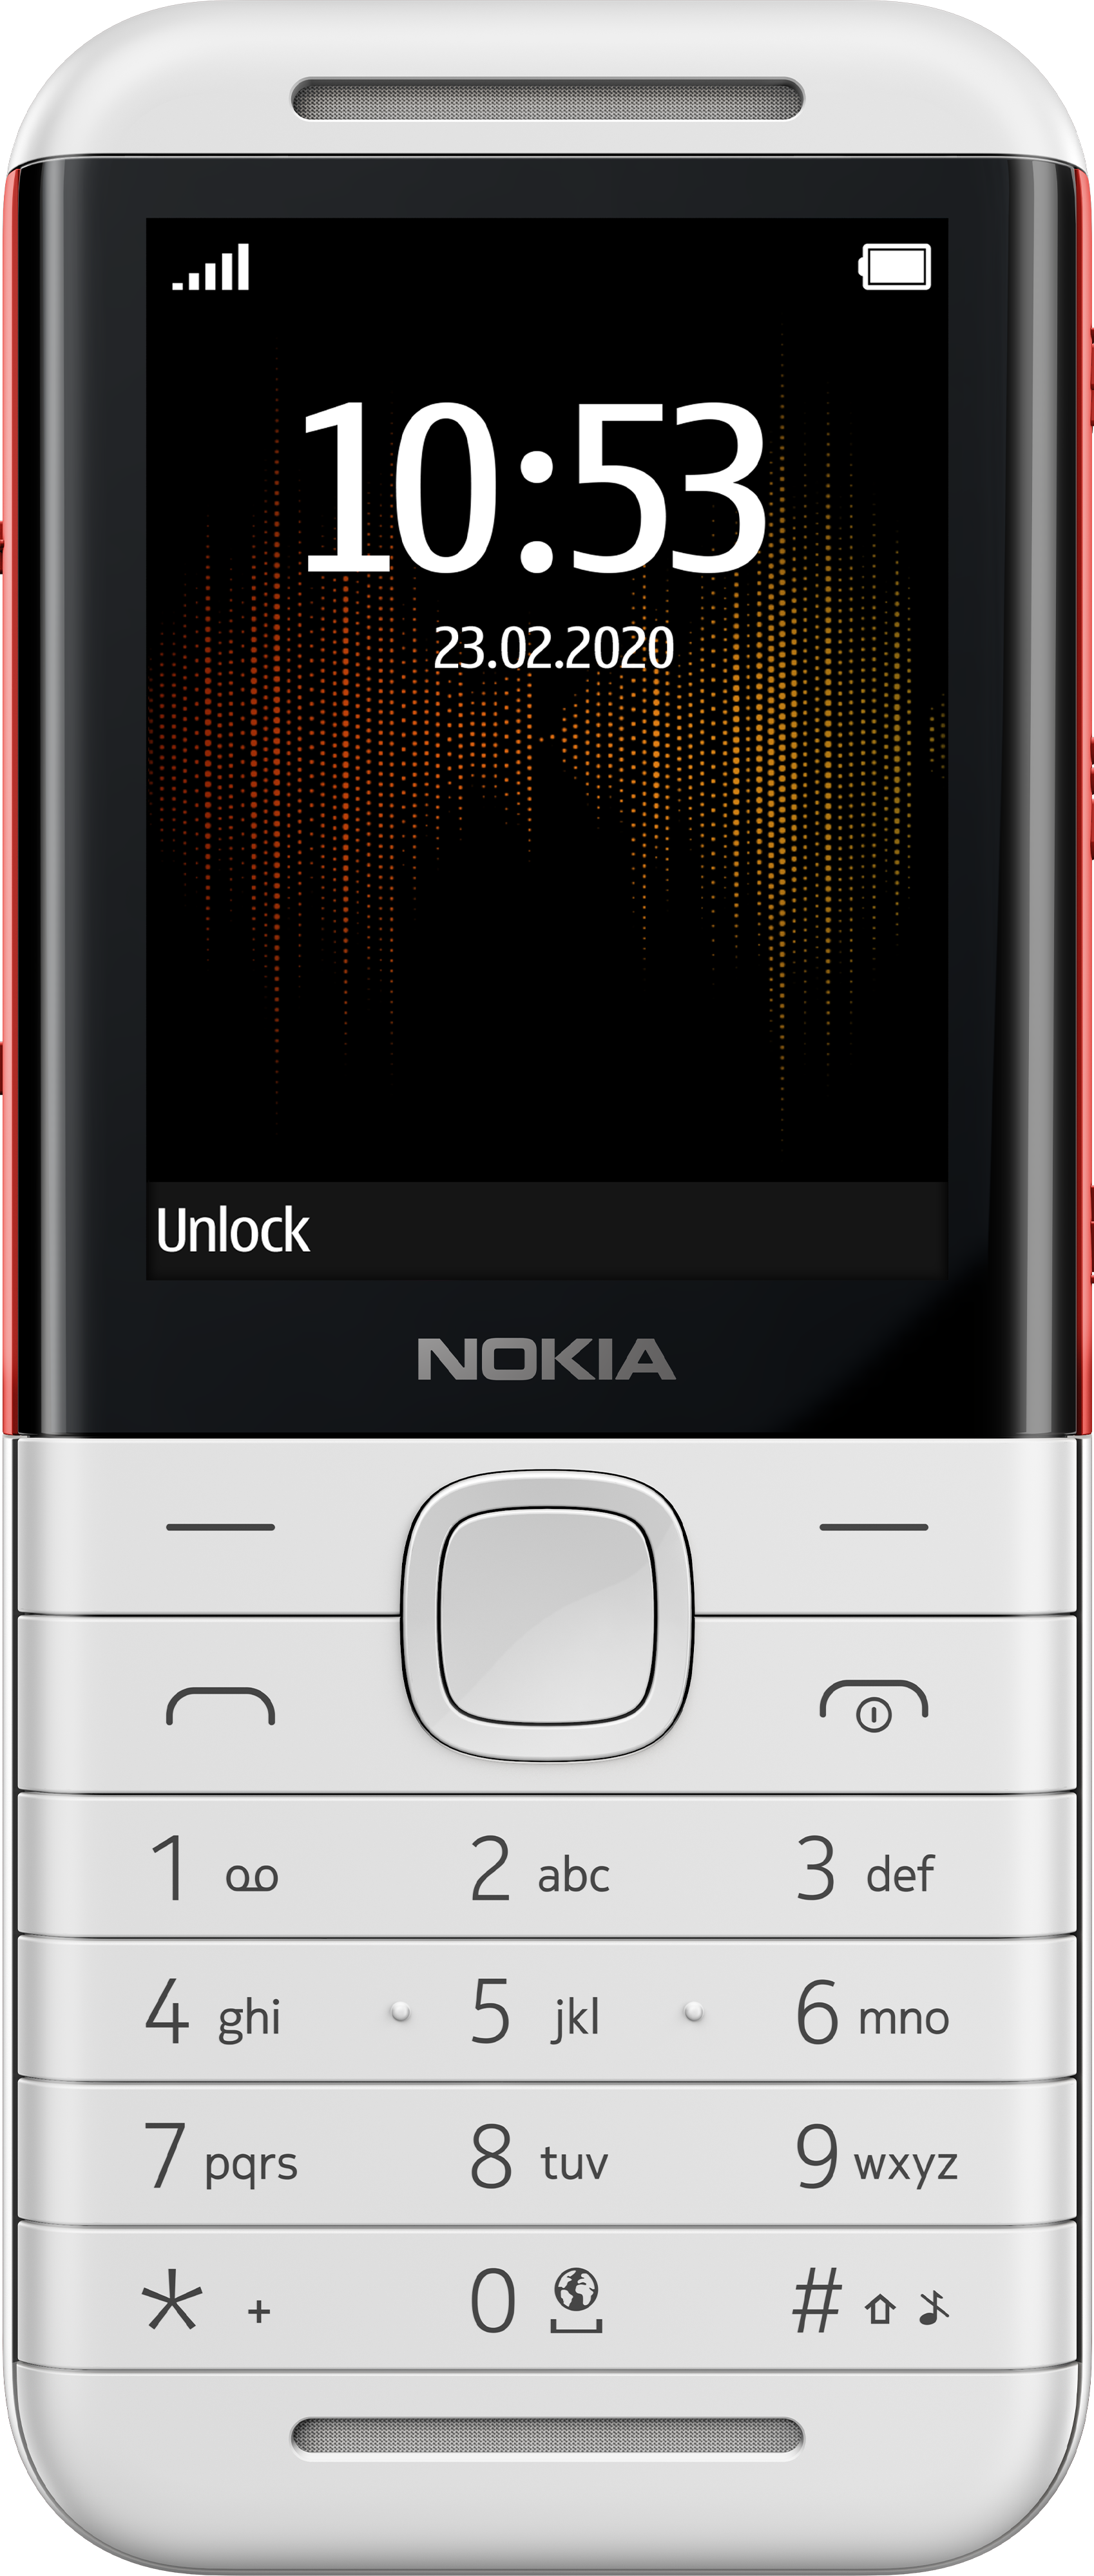 Nokia XpressMusic 5310 (Unlocked) Cellular Phone 564687441544 | eBay